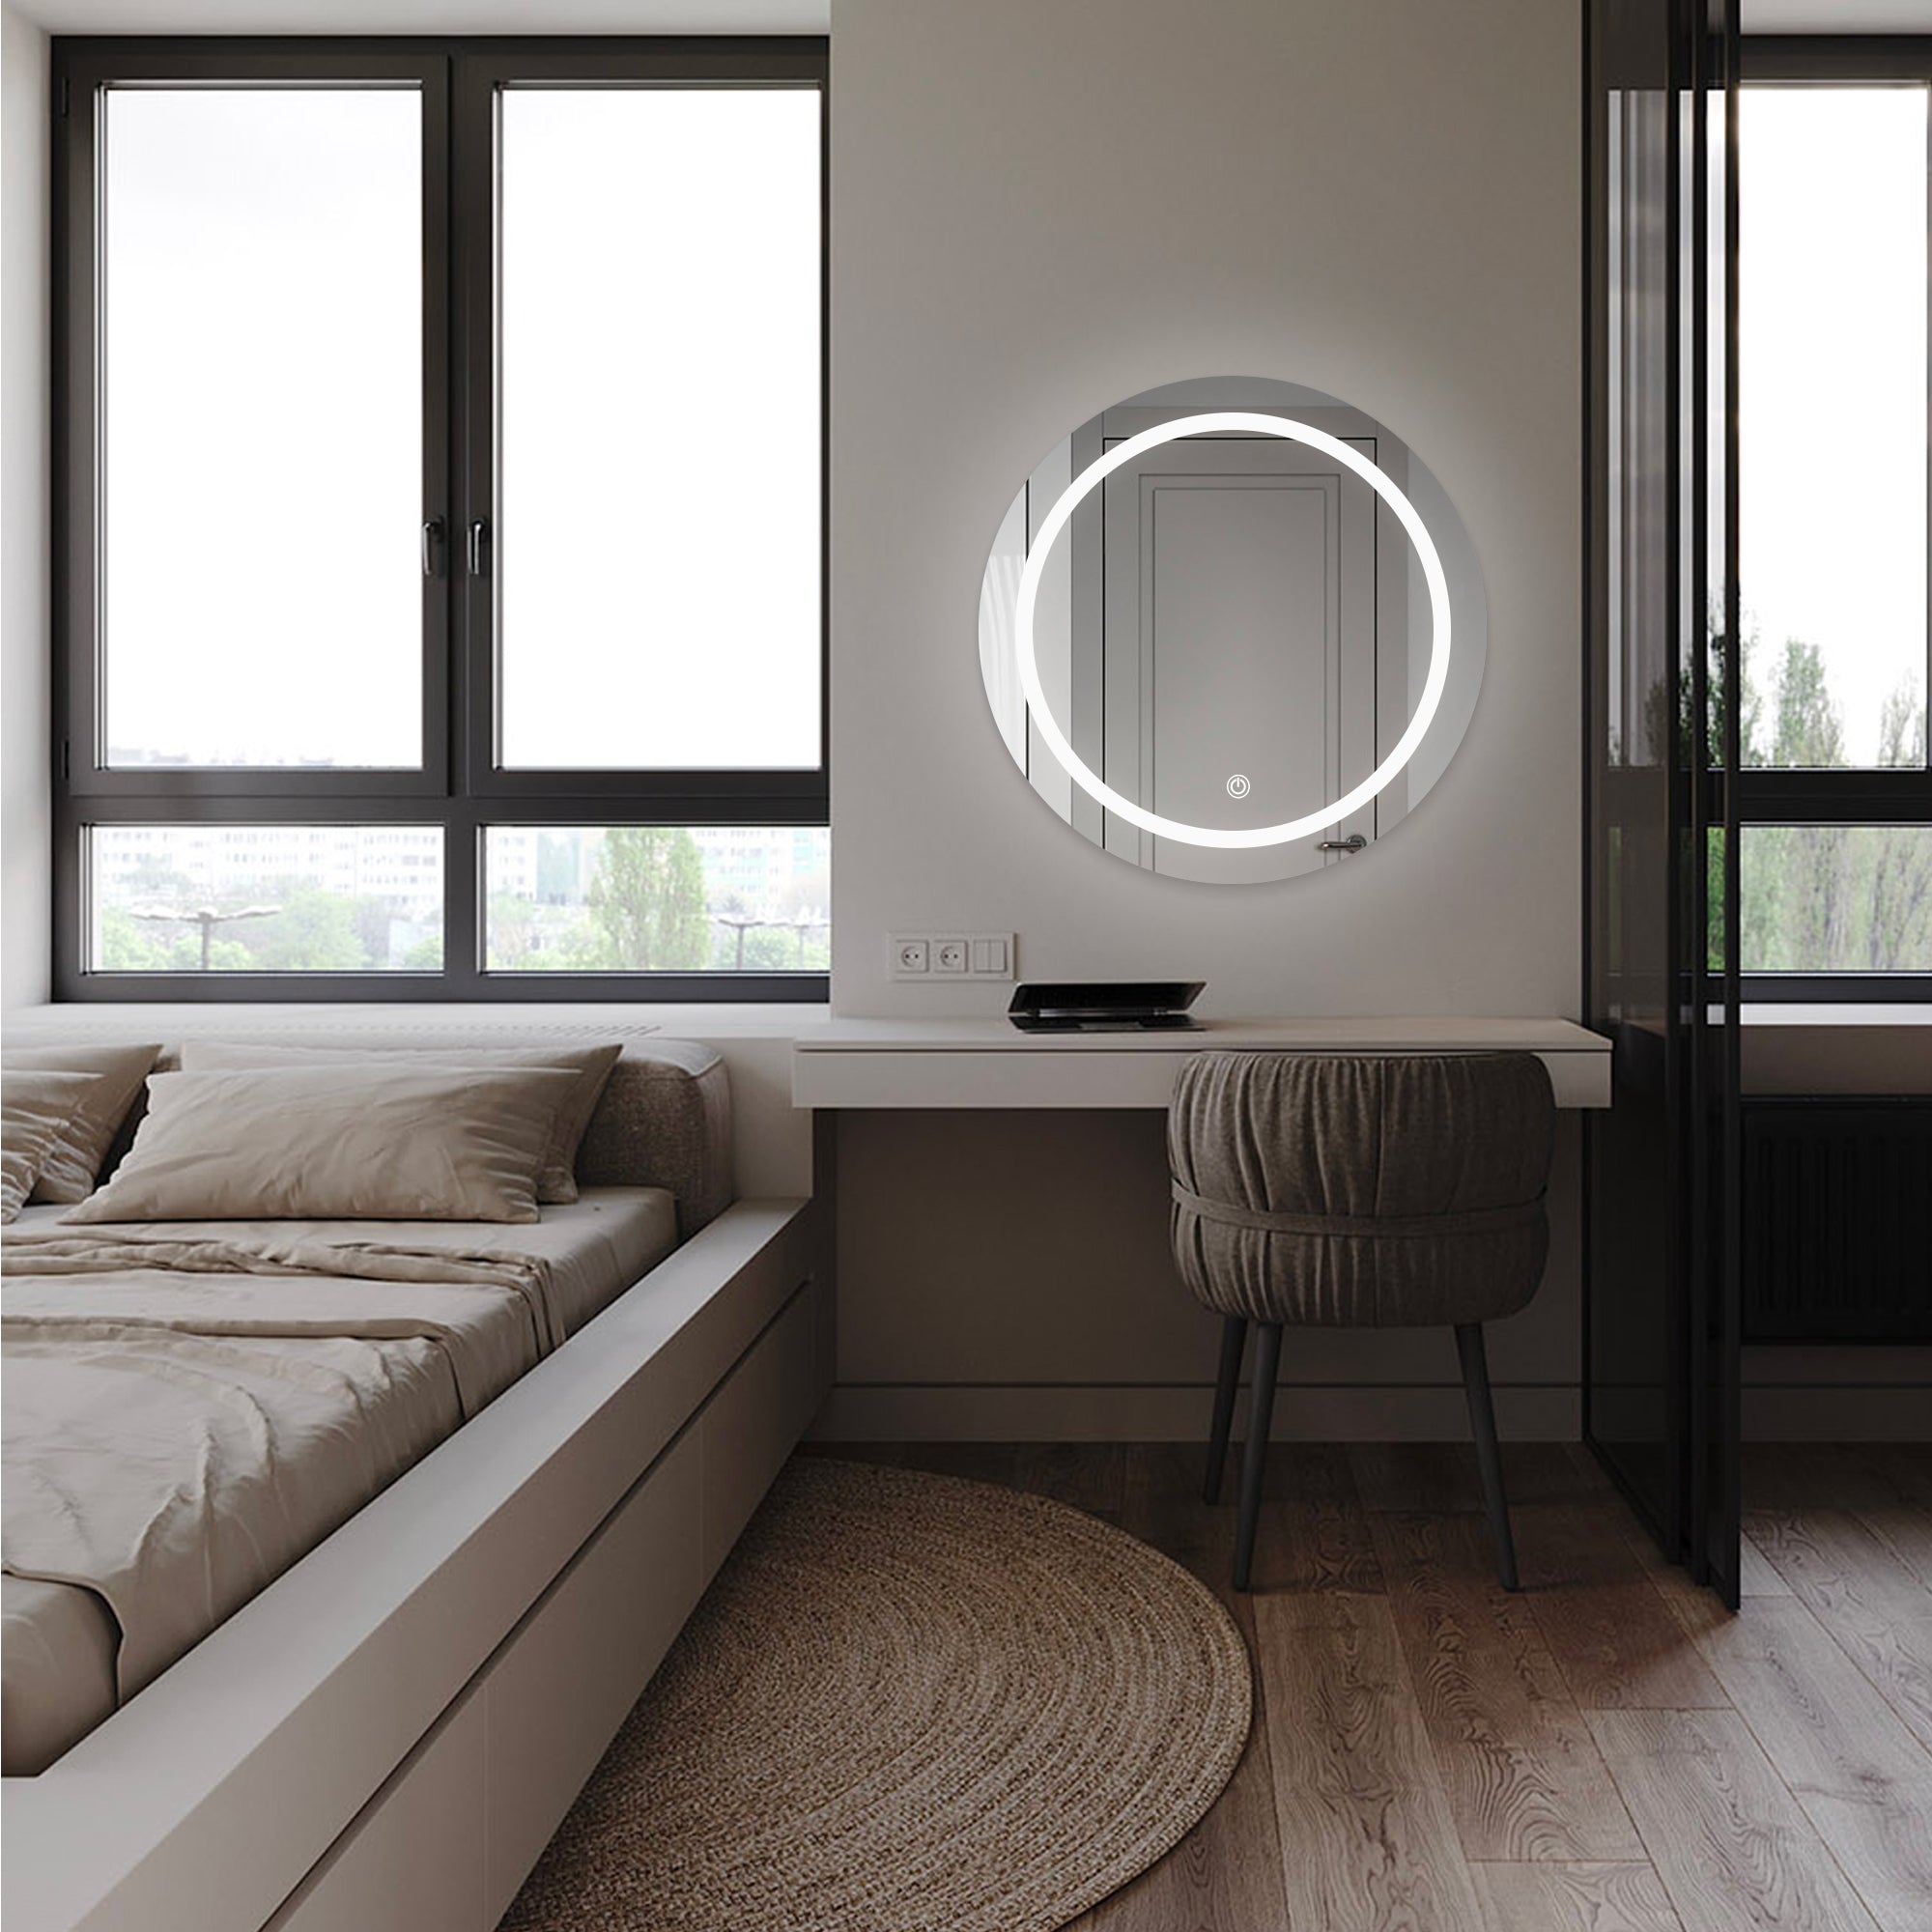 MERCURY LED mirror for bedroom